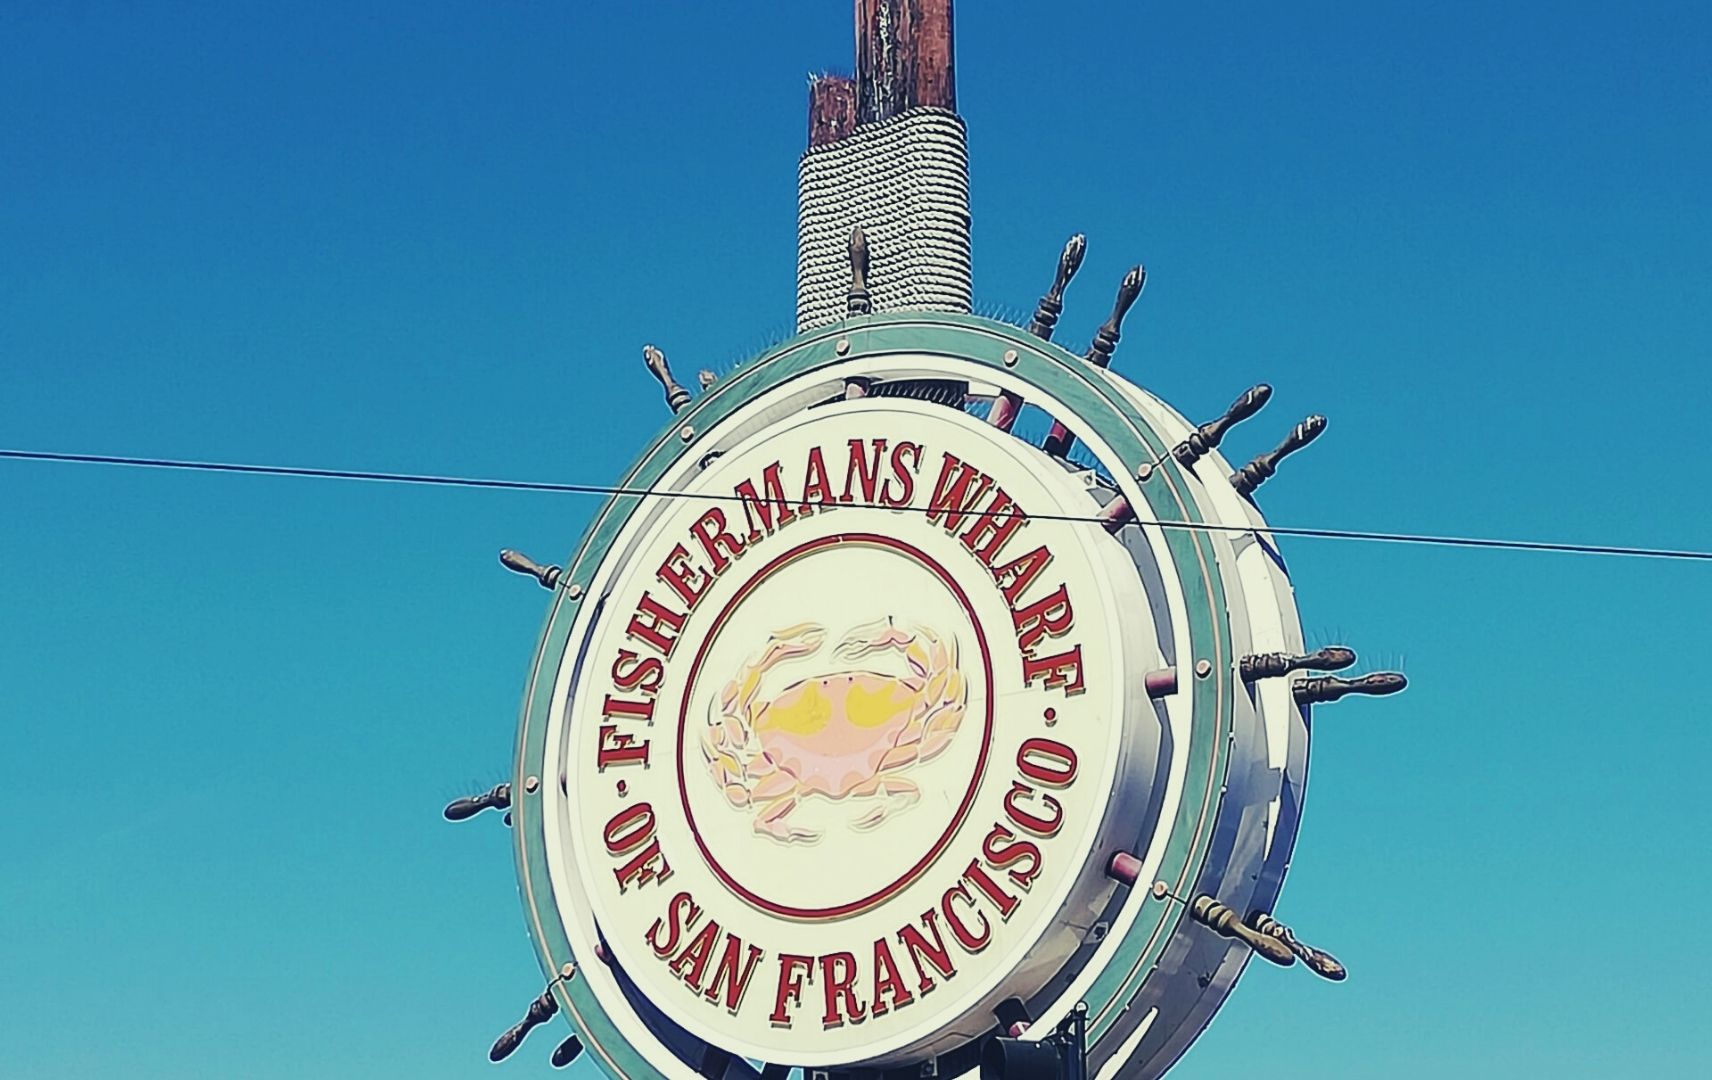 San Francisco Fishermans Wharf sign